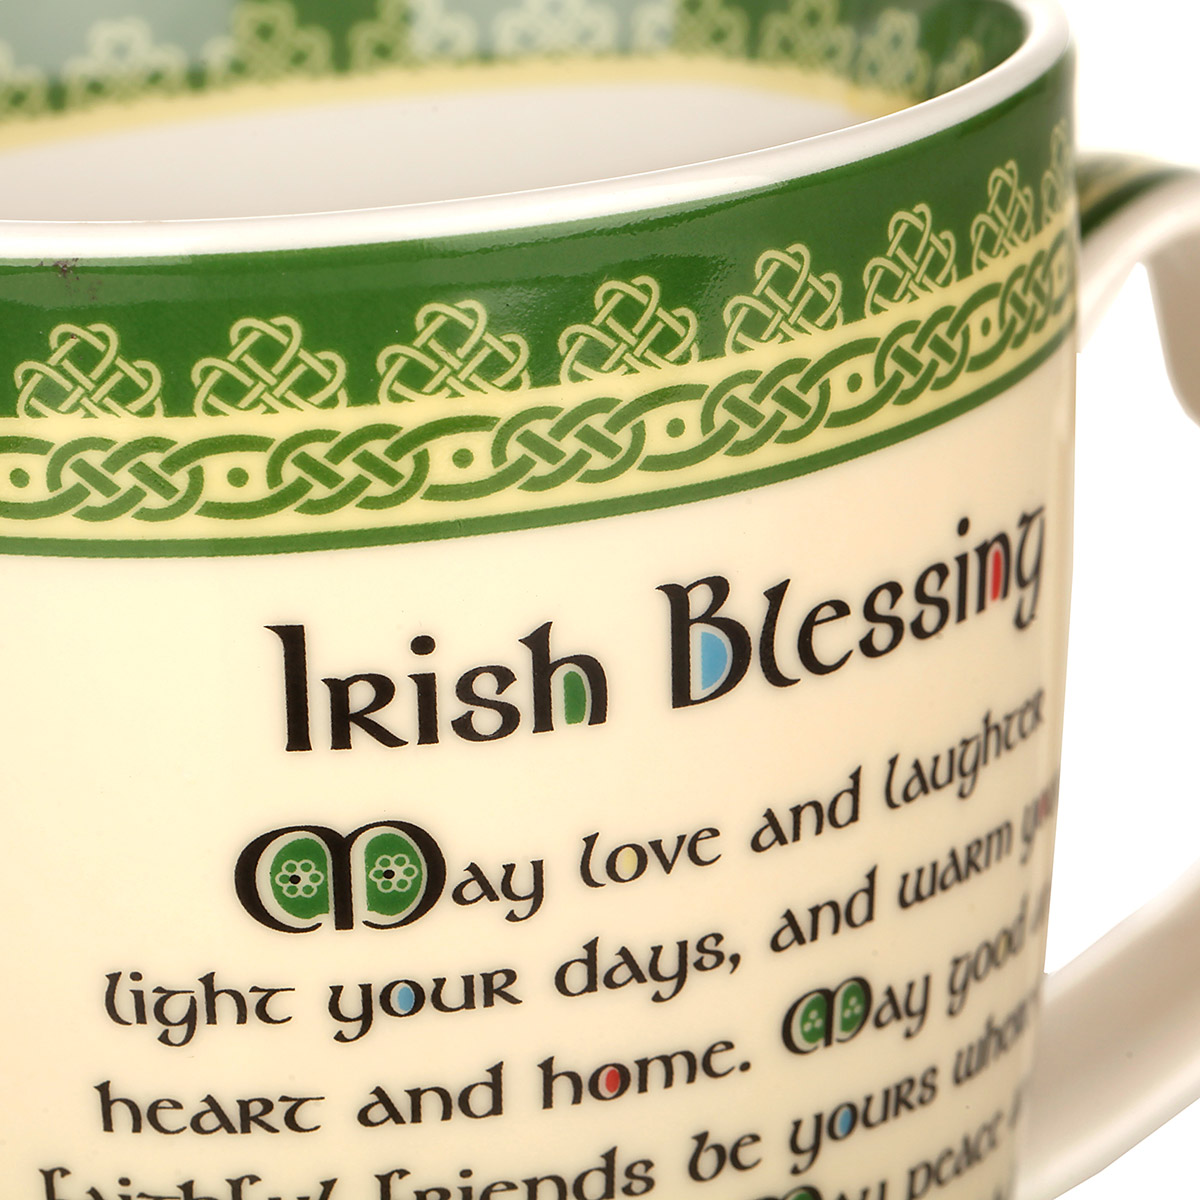 Irish Blessing Mug  "May love and laughter light your days"  Kaffeebecher aus Irland